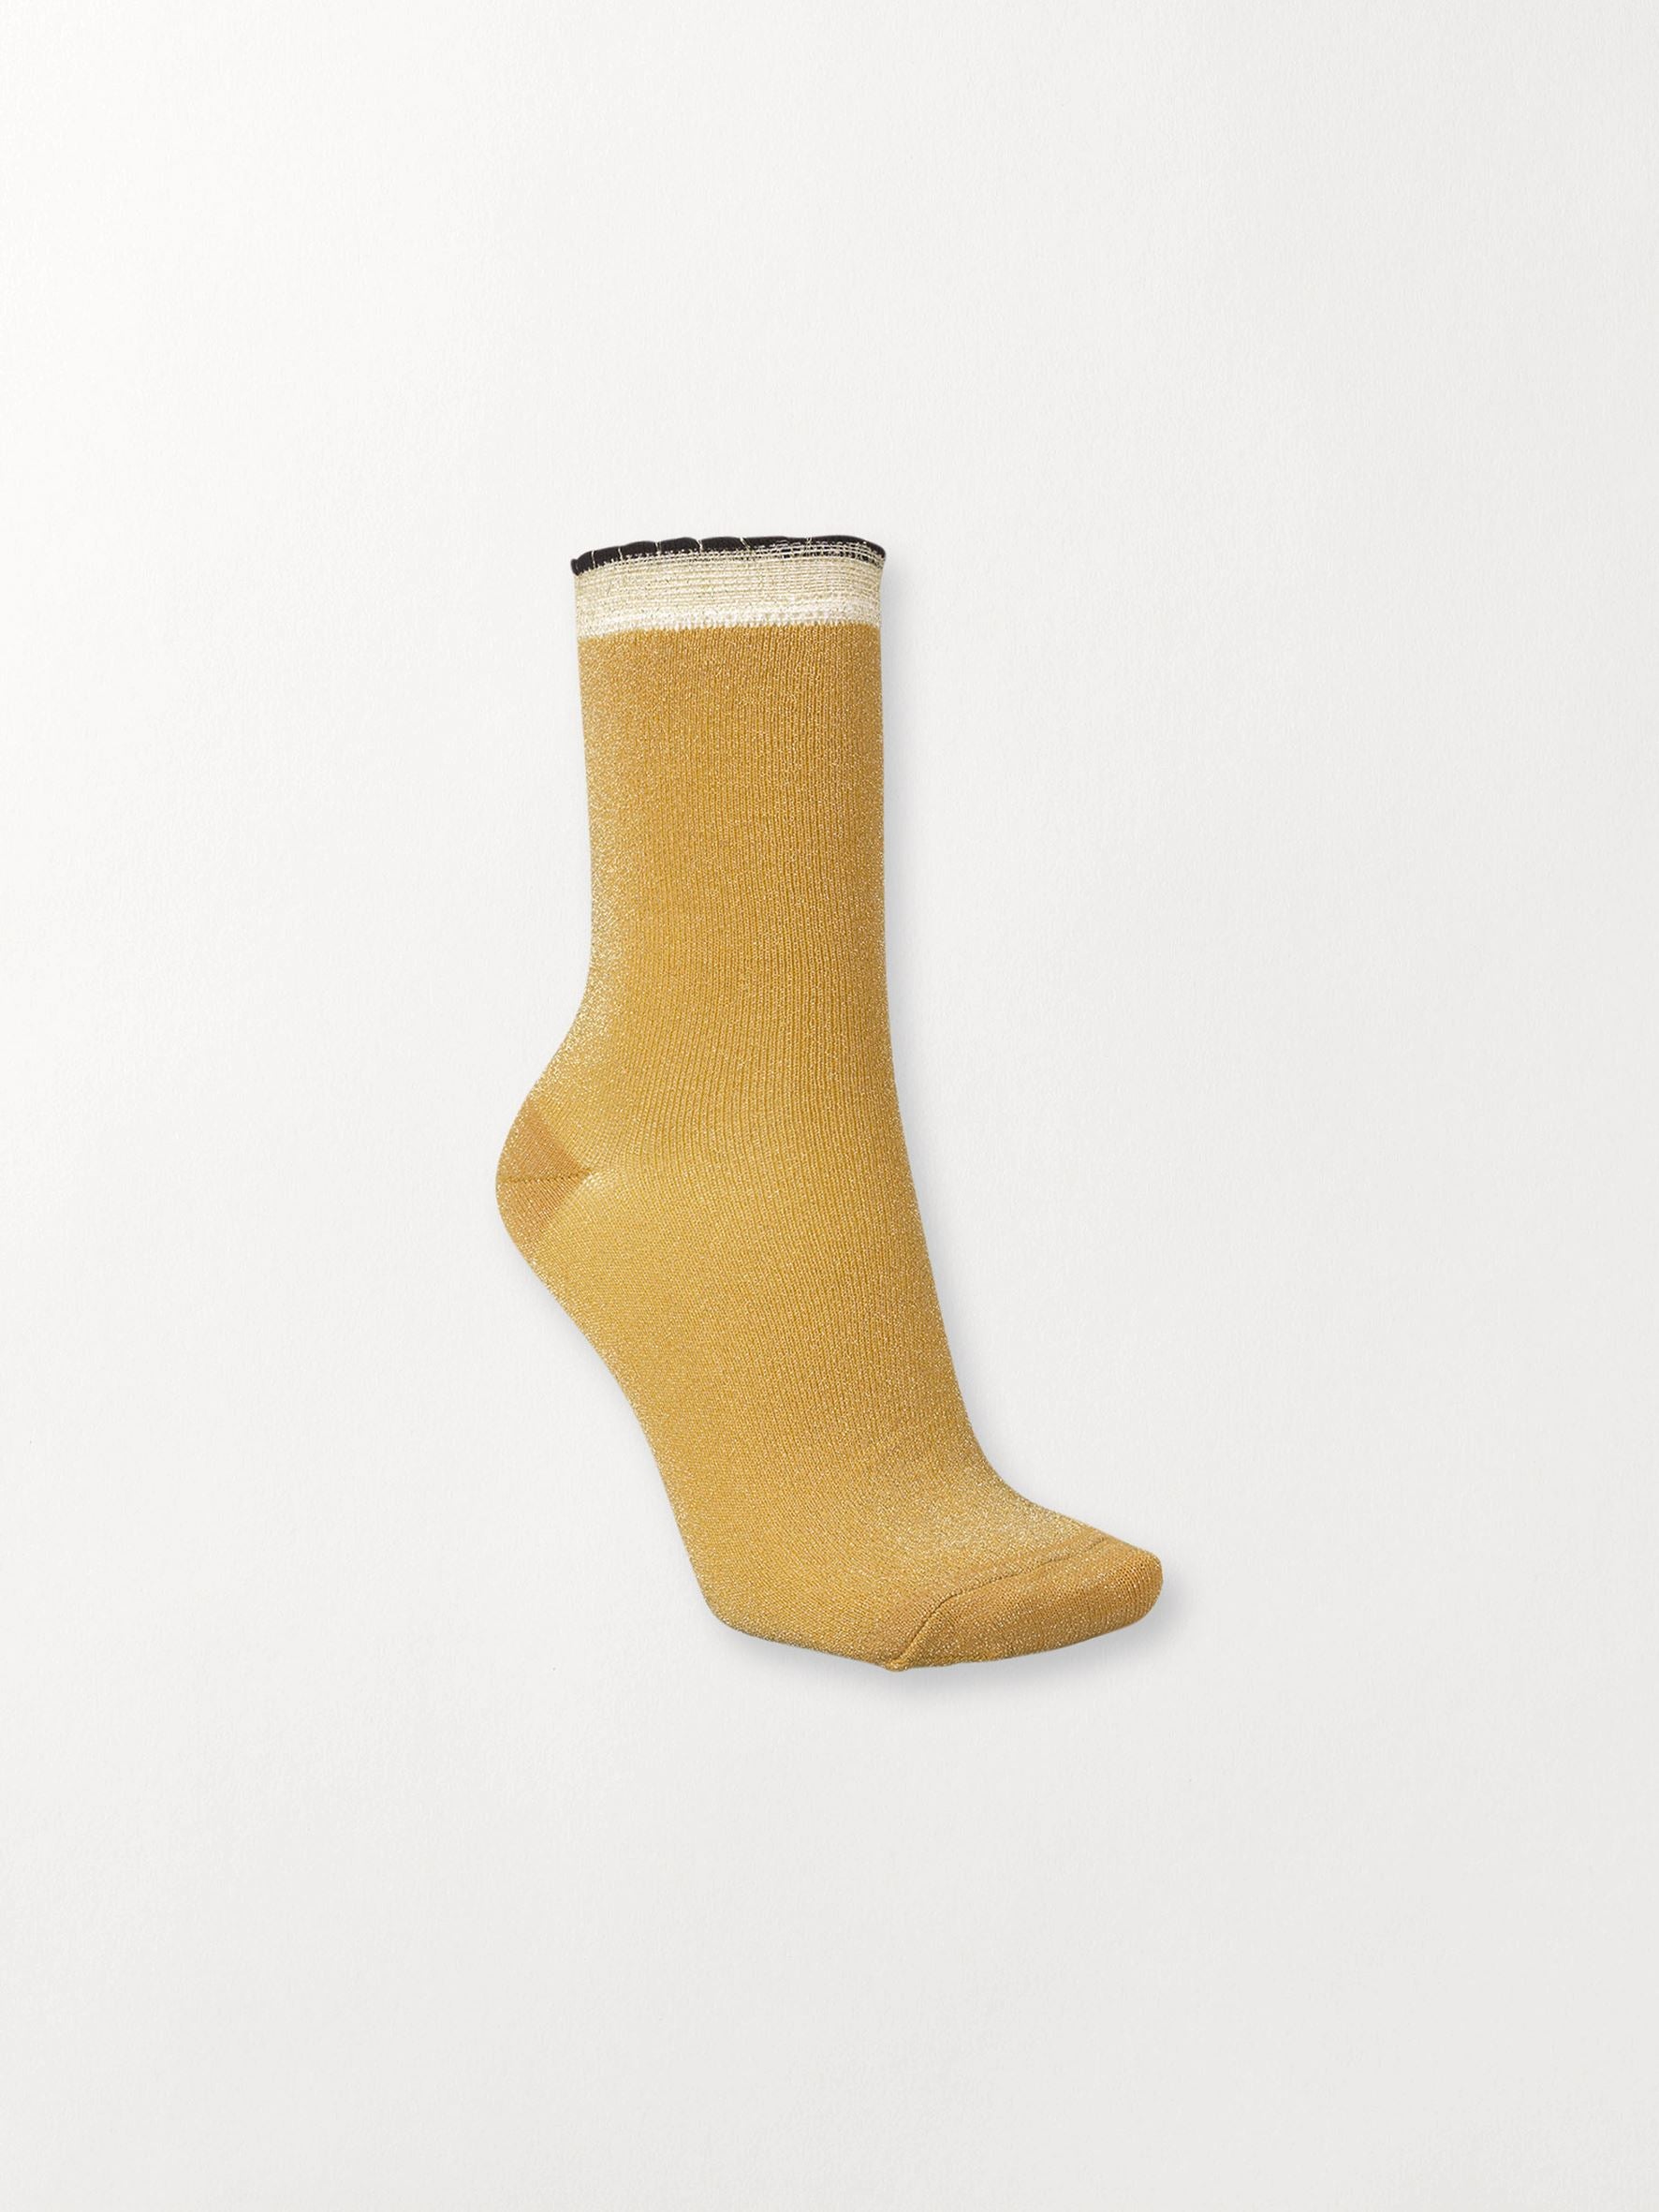 Becksöndergaard, Darla Sock - Golden Yellow, archive, archive, sale, sale